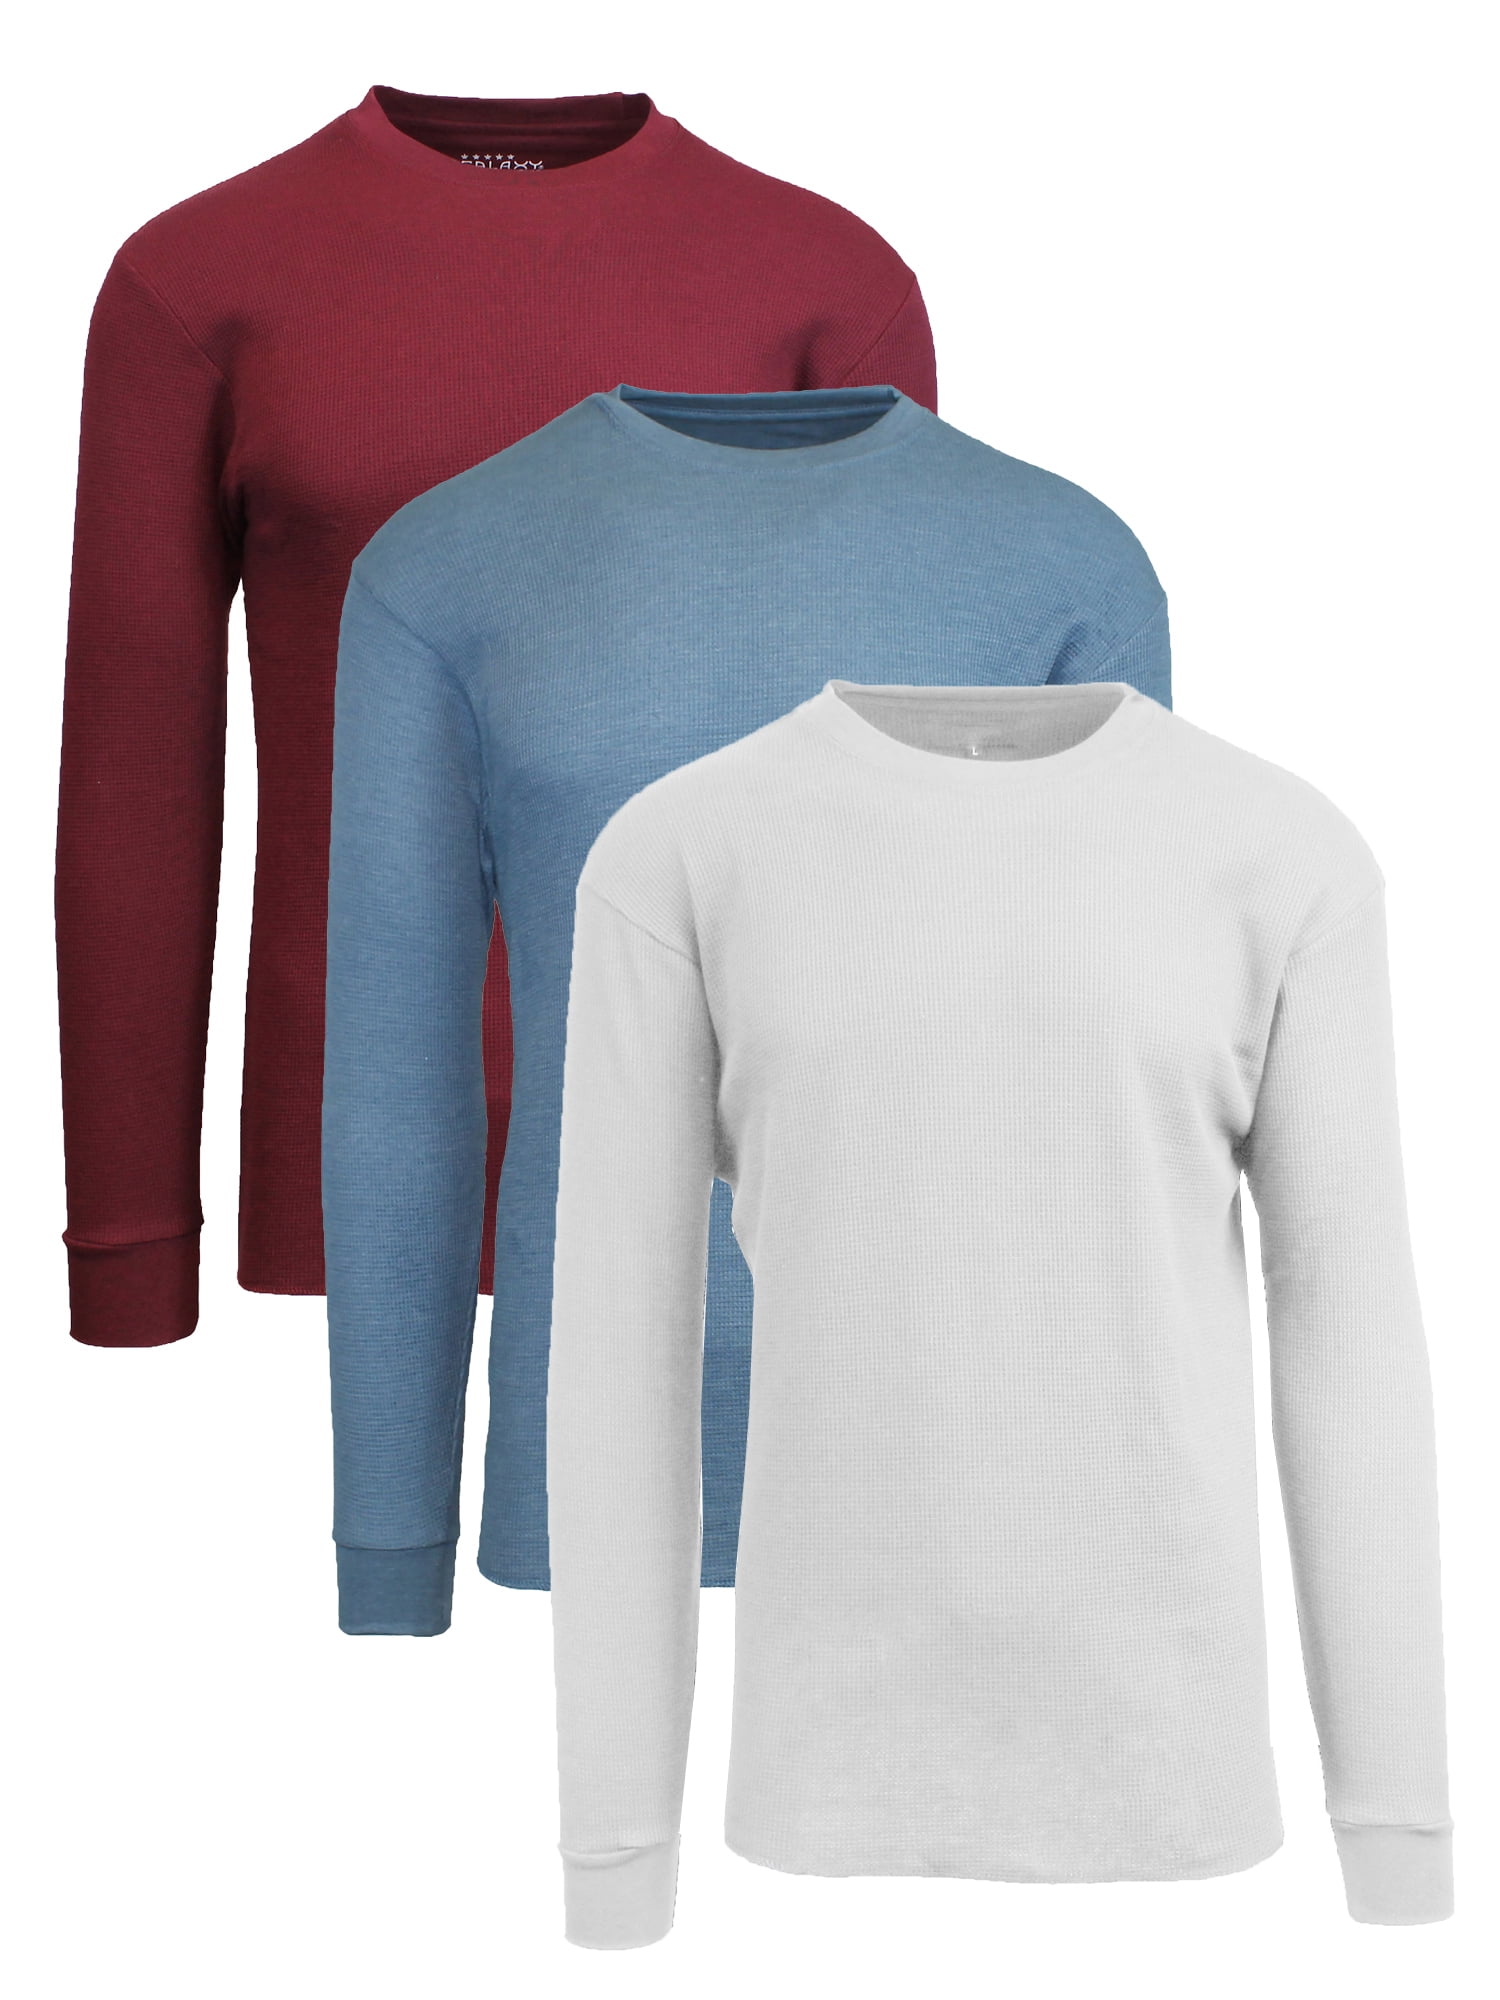 Small - Blue Pack of 5 Socks Uwear Mens Winter Thermal Long Sleeve T Shirt 